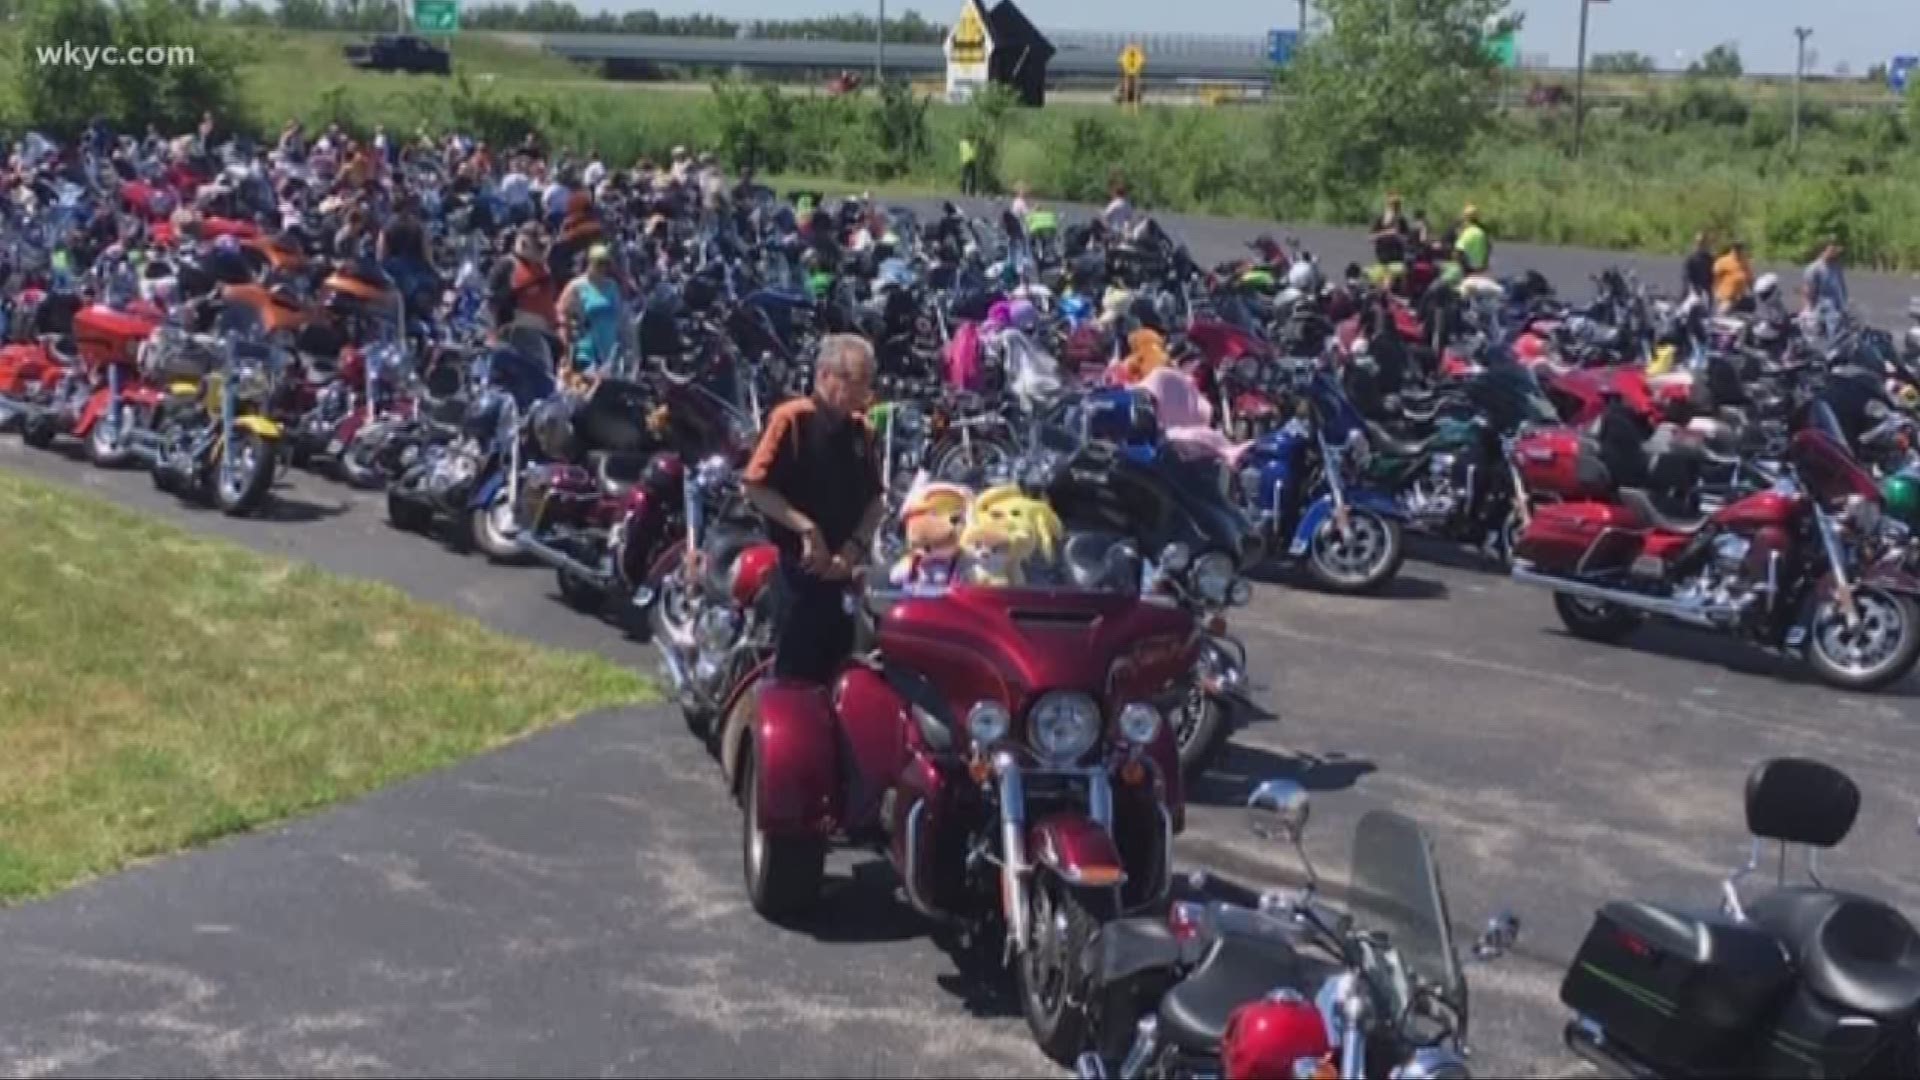 Lake Erie Harley Davidson host annual toy run